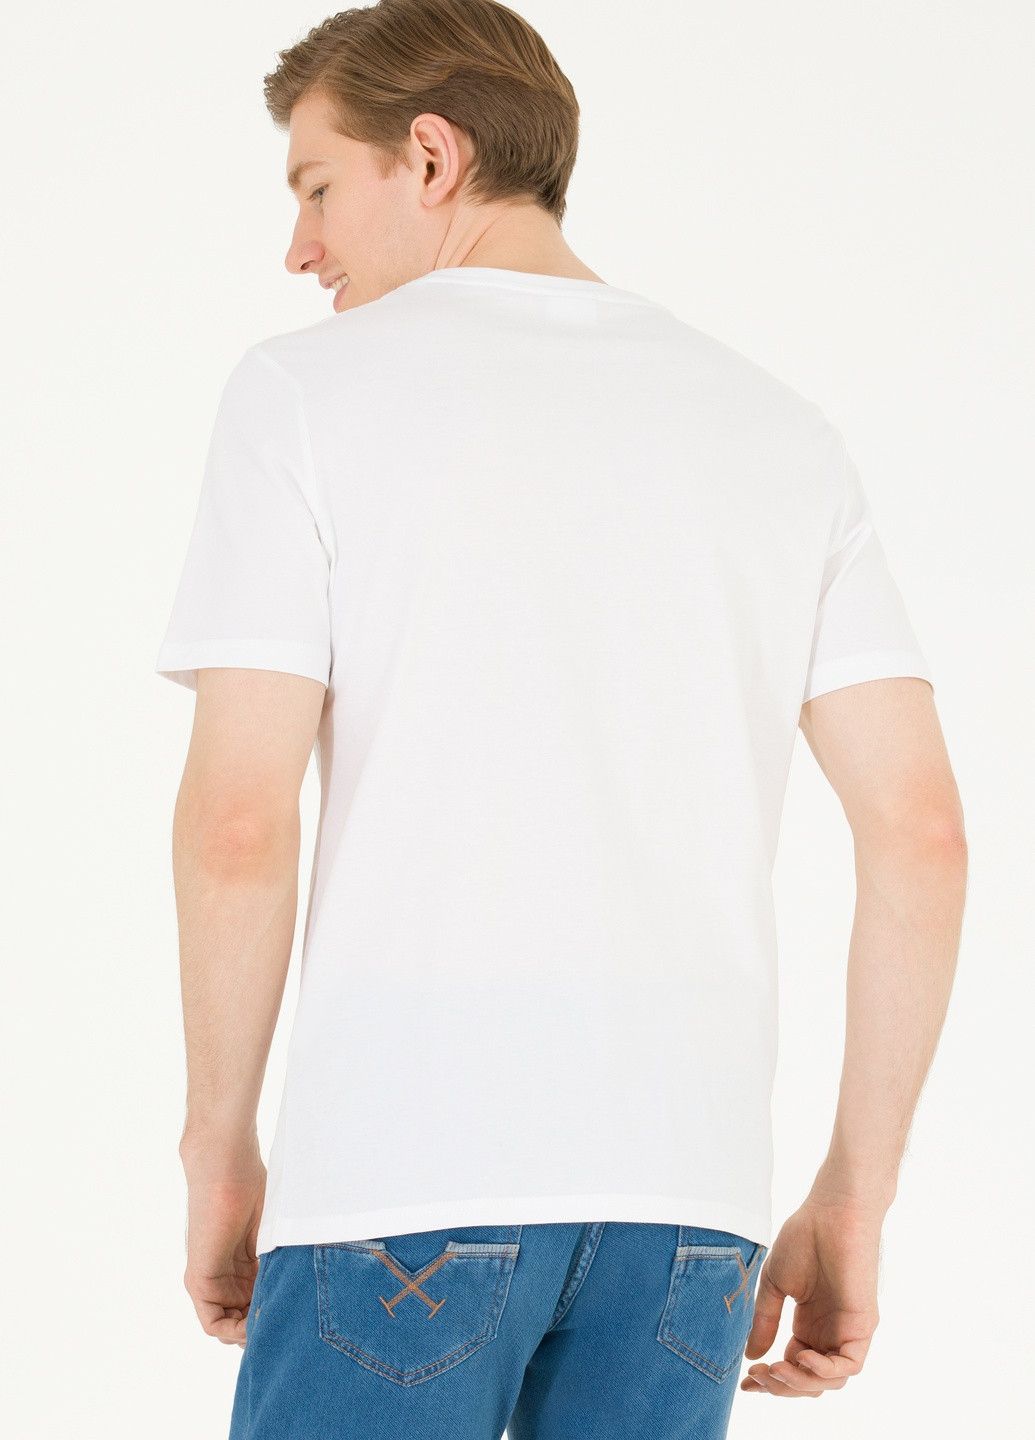 Белая футболка-футболка u.s.polo assn мужская для мужчин U.S. Polo Assn.